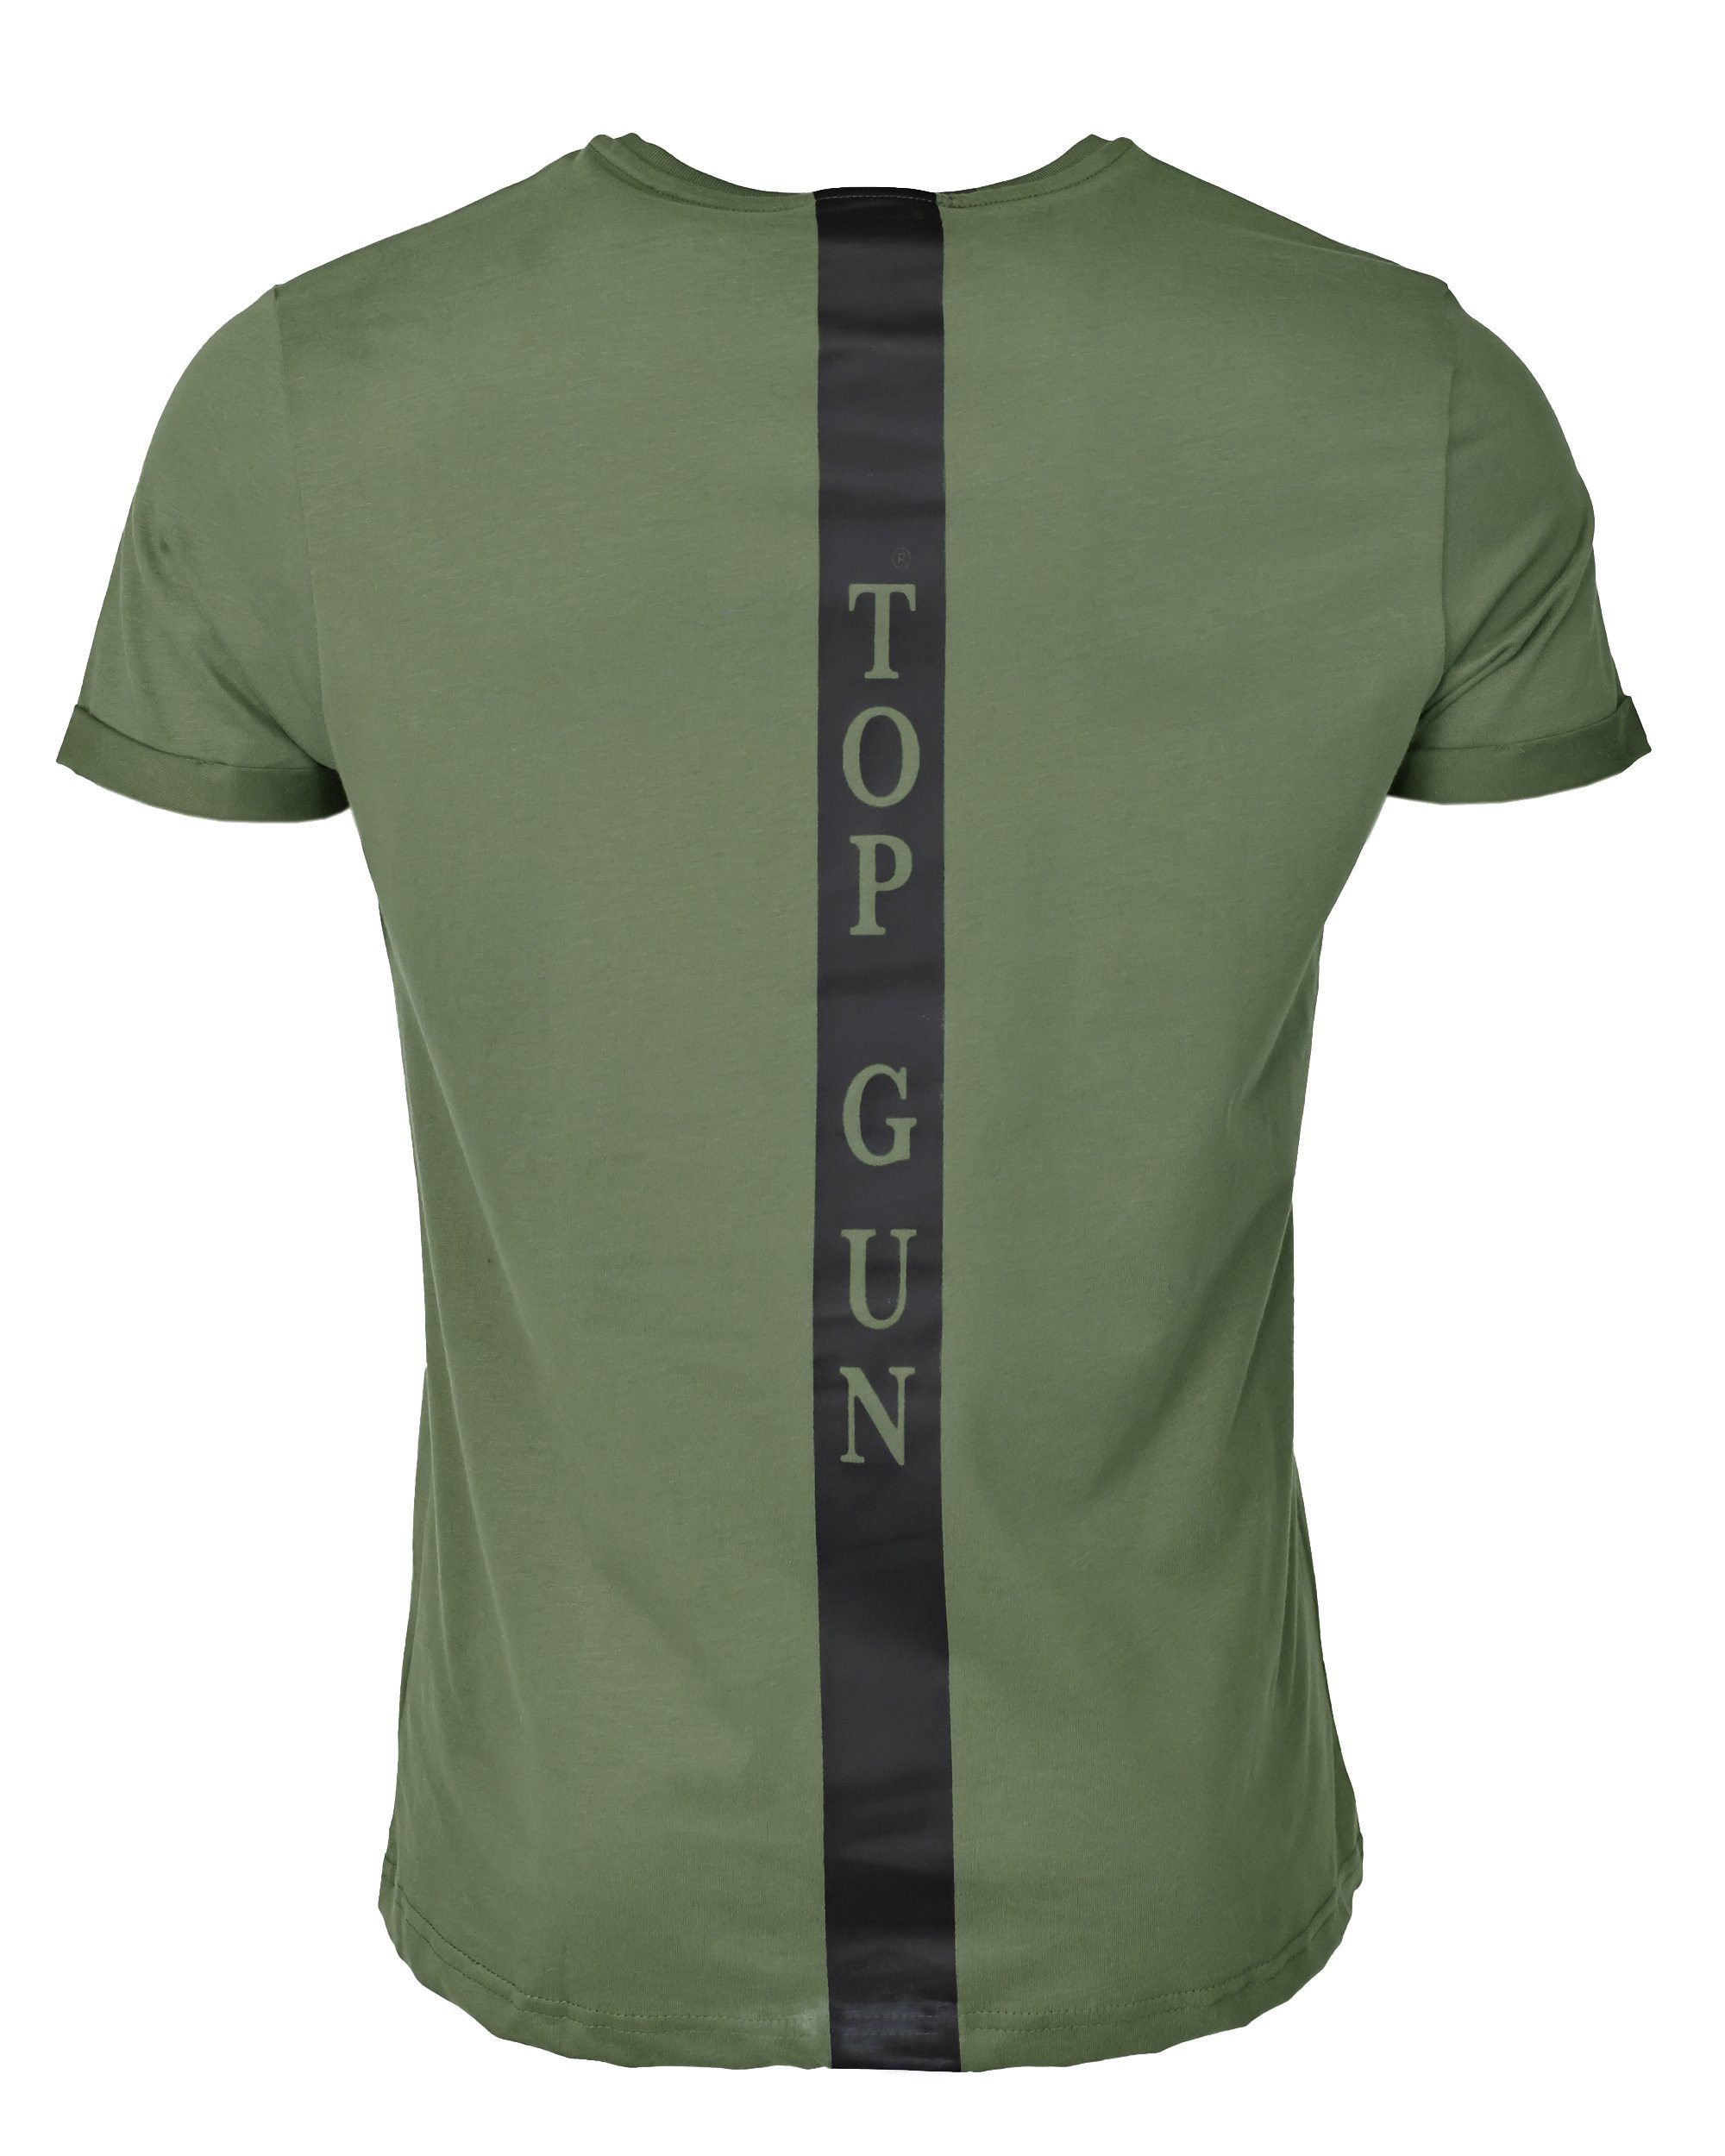 GUN olive T-Shirt TOP TG20213011